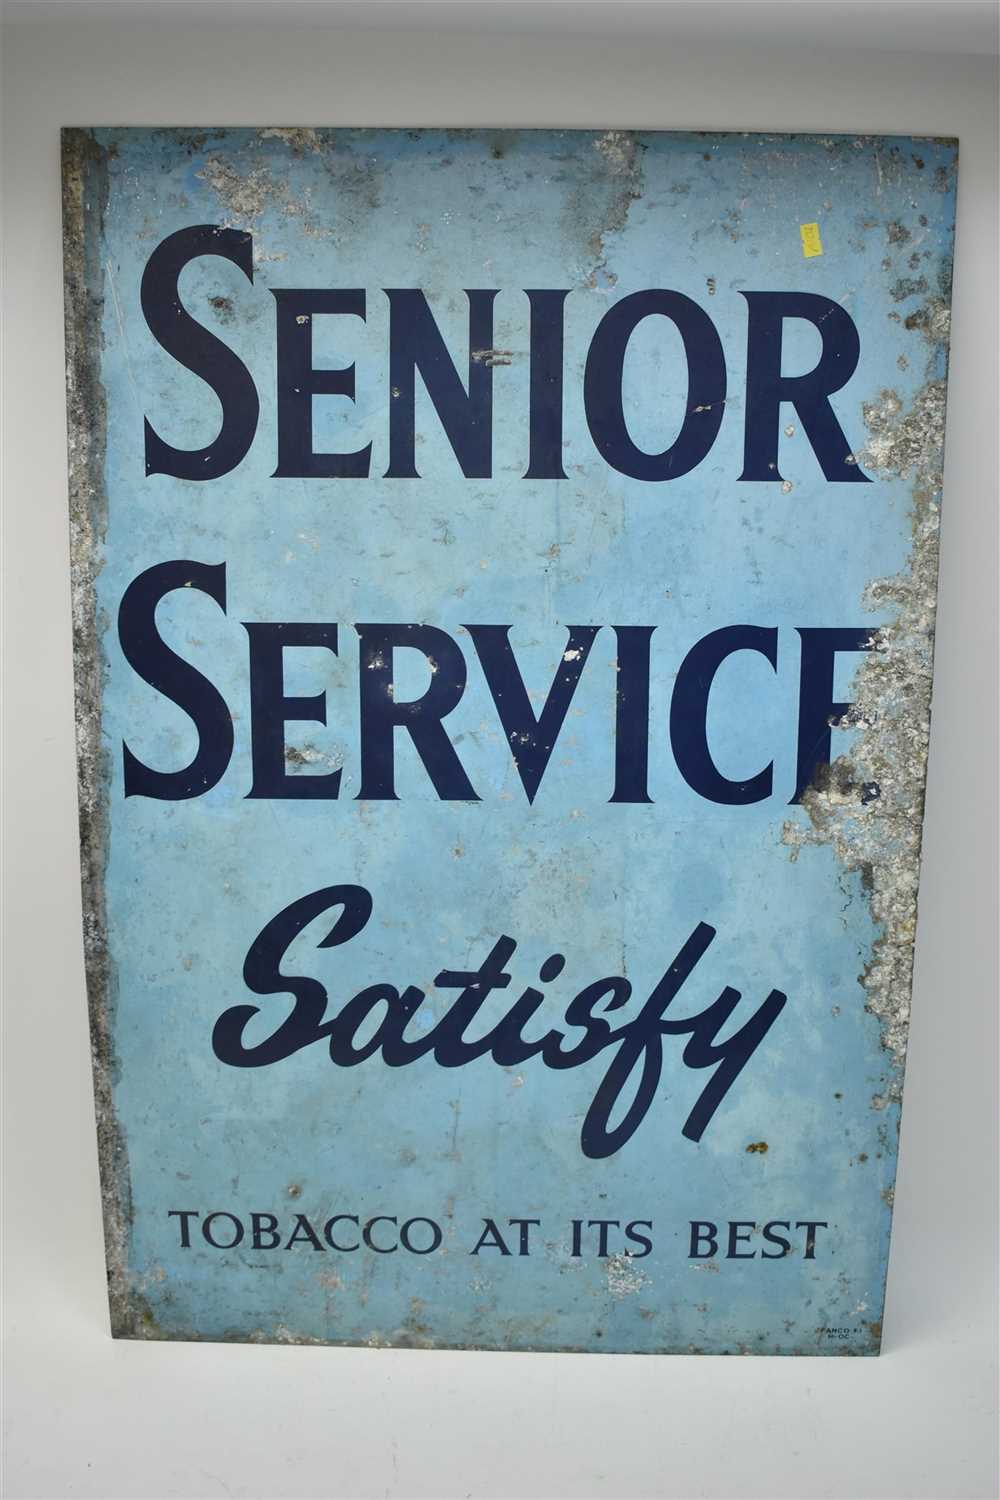 Lot 236 - Senior Service tobacco sign